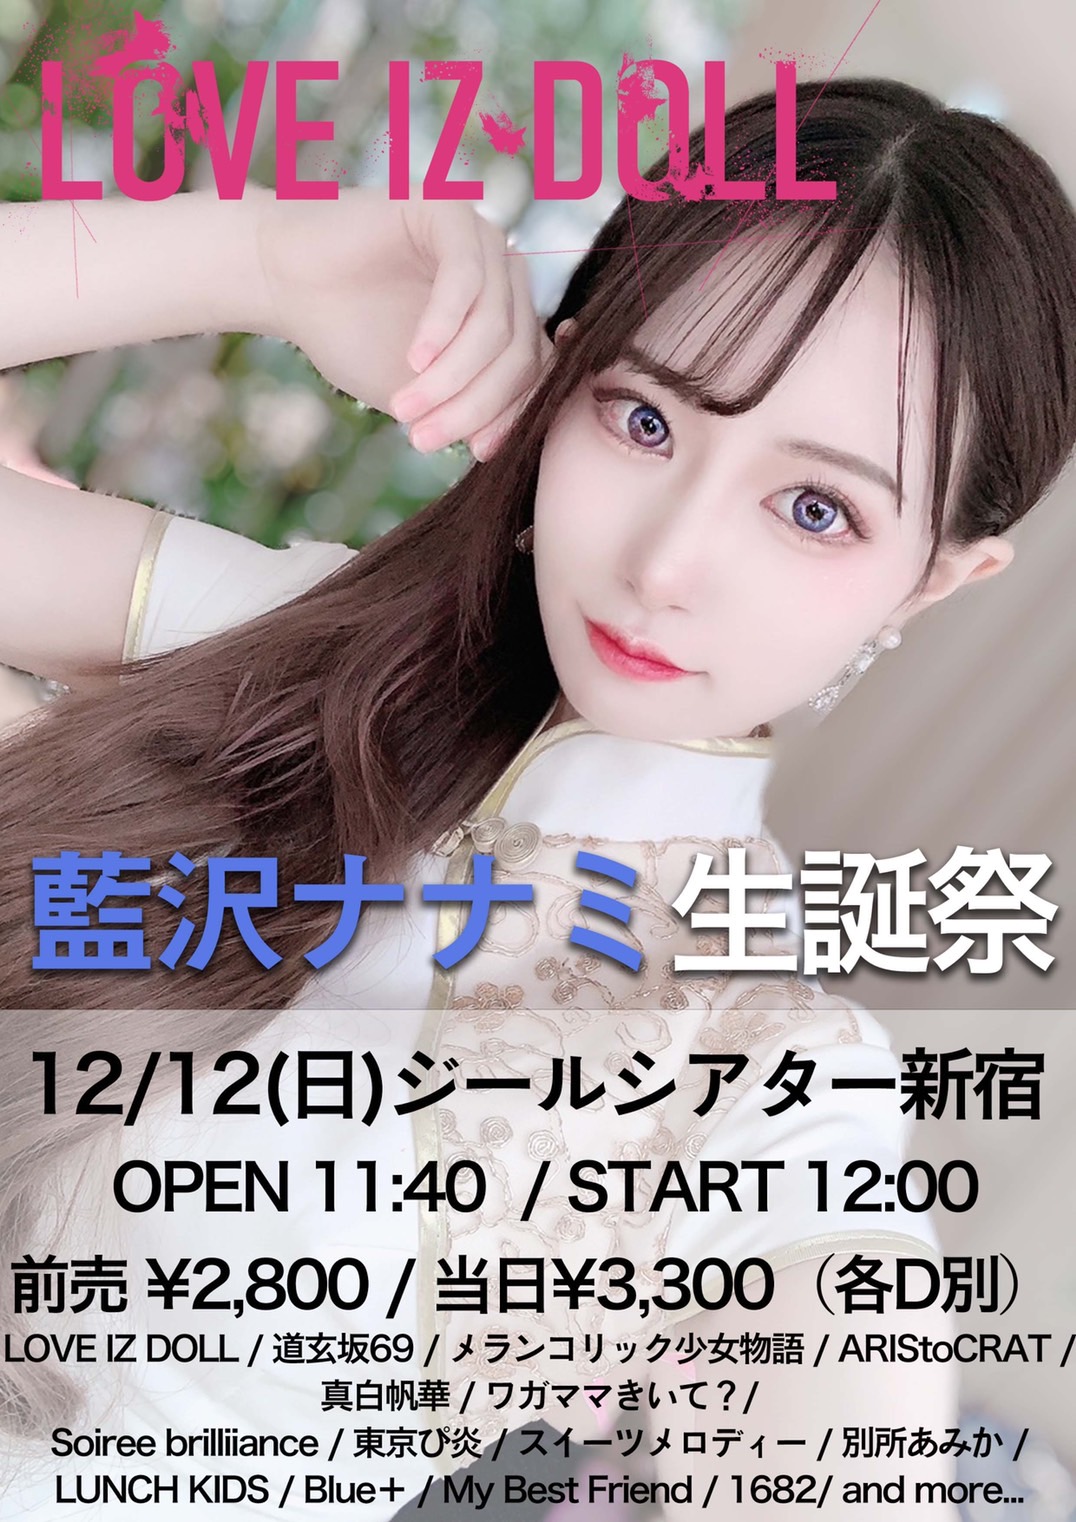 LOVE IZ DOLL 藍沢ナナミ 生誕祭イベントのチケット情報・予約・購入 